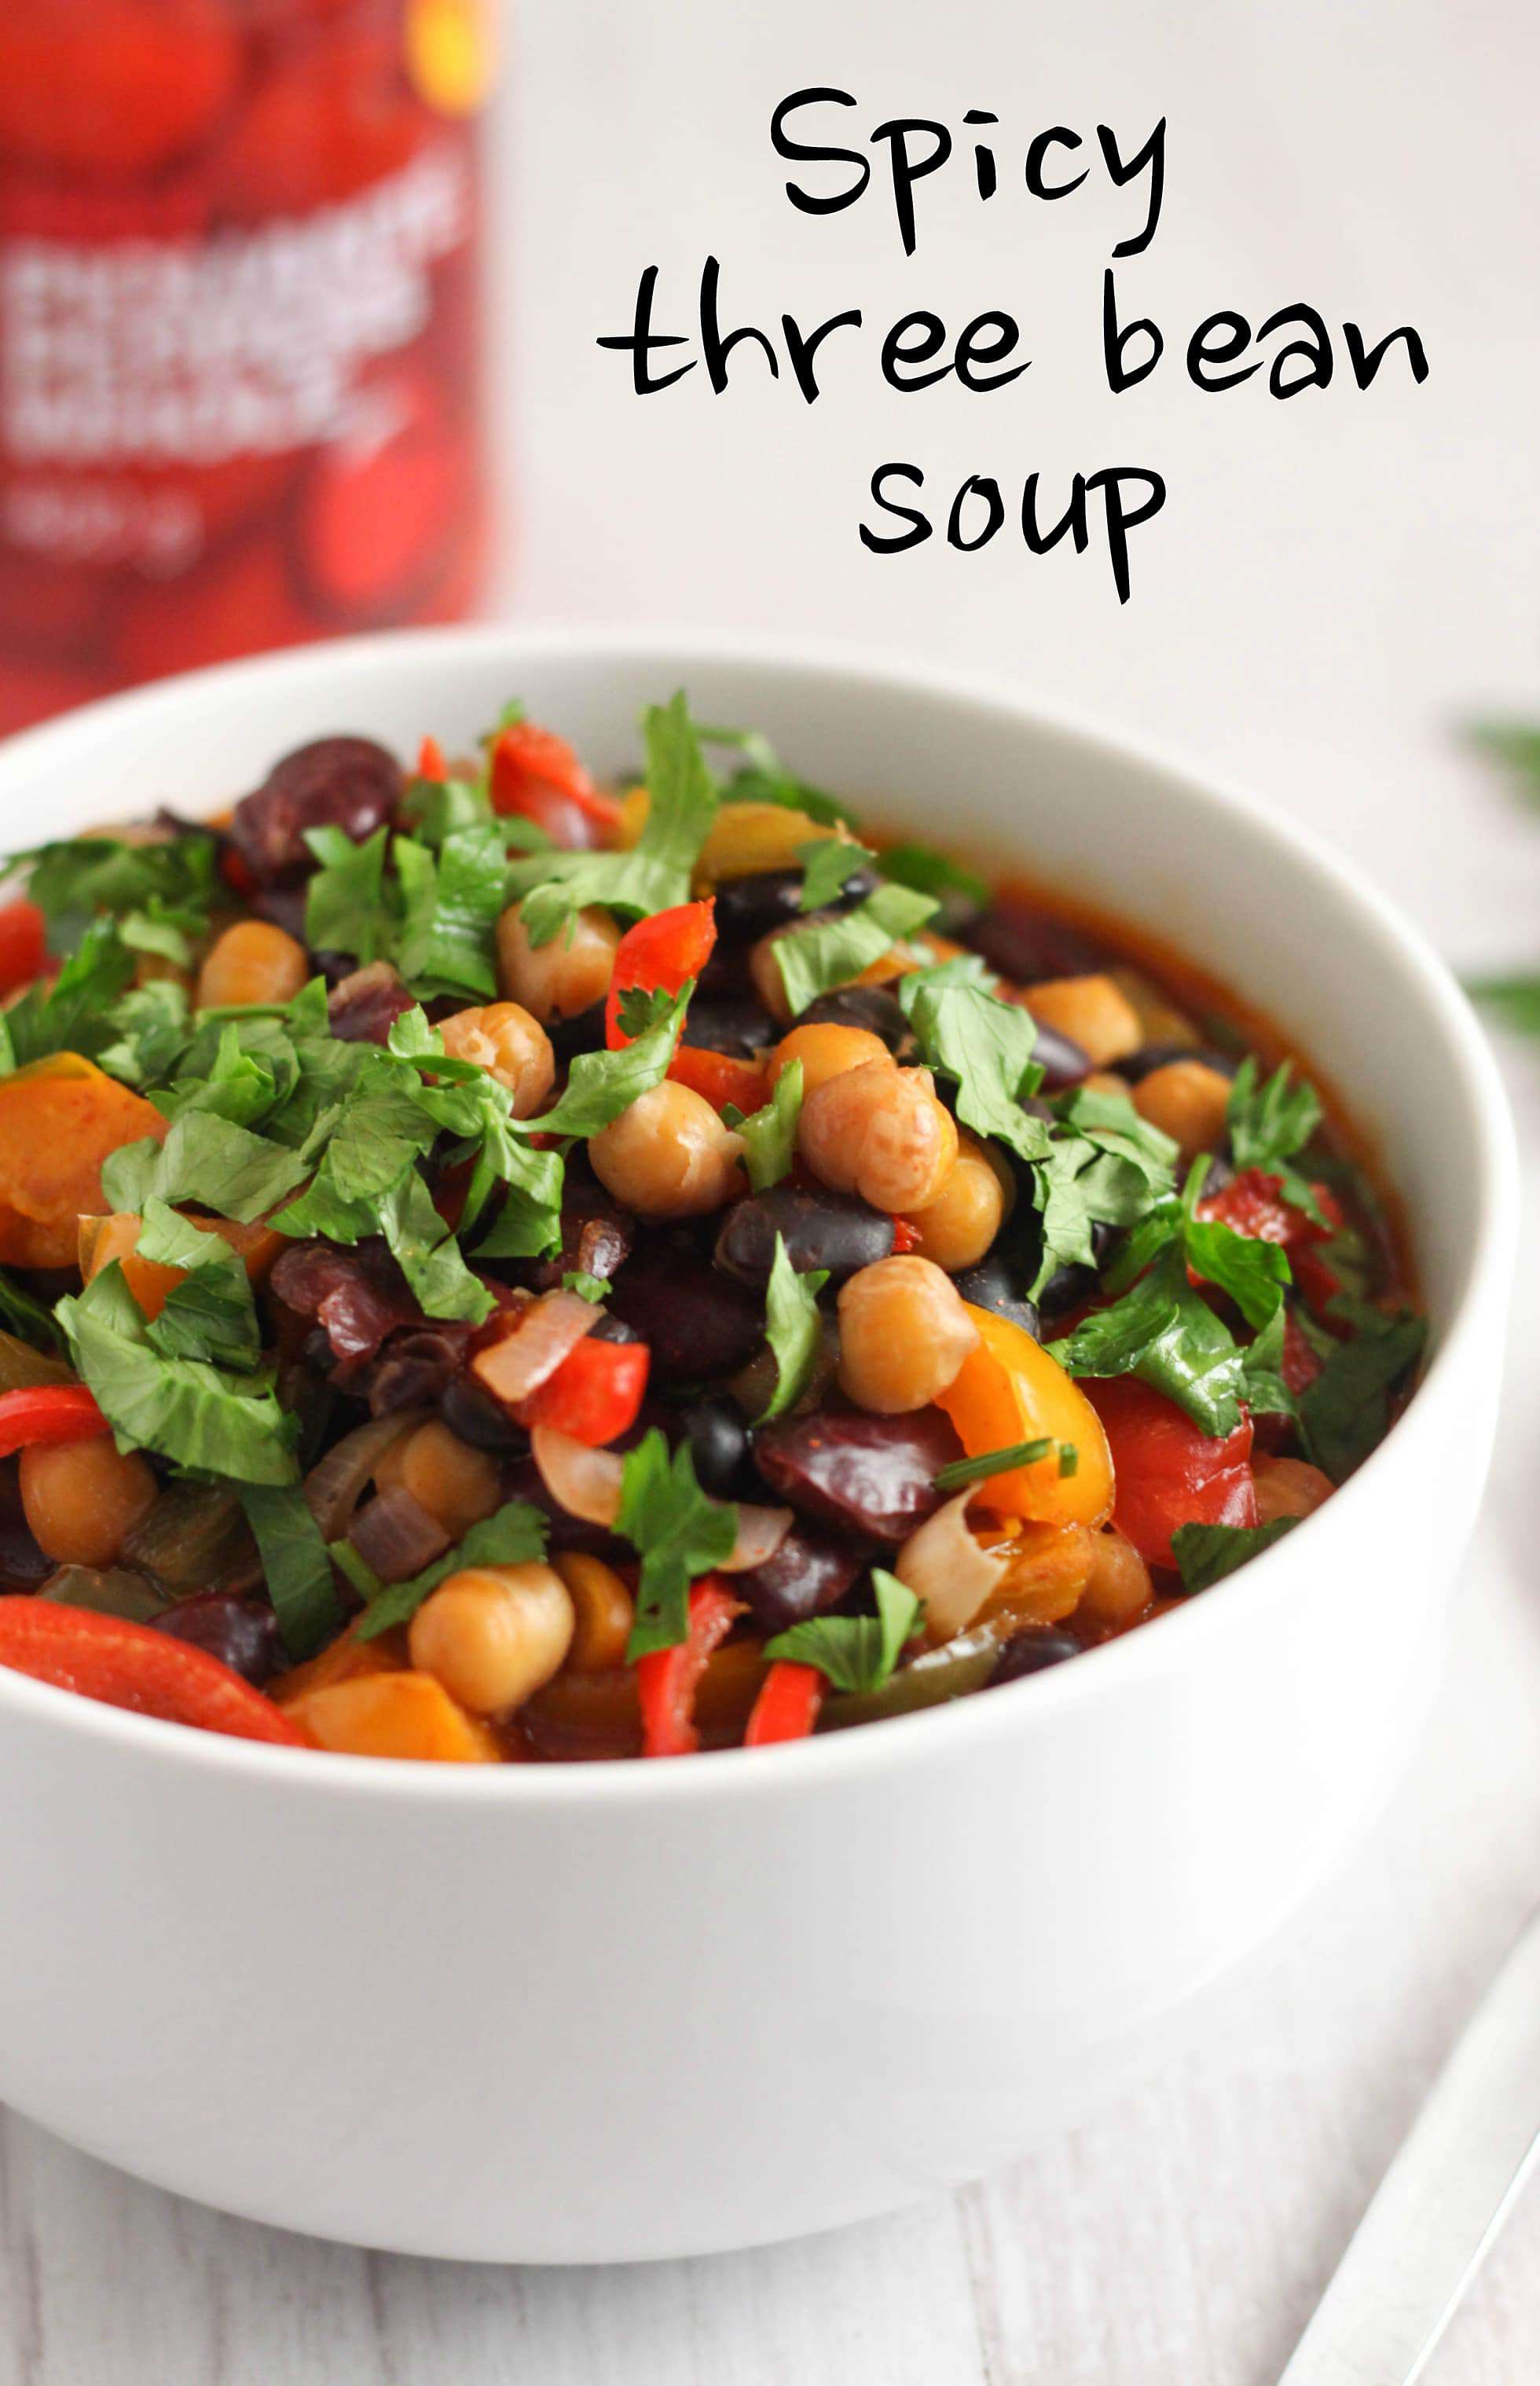 Spicy three bean soup – Easy Cheesy Vegetarian